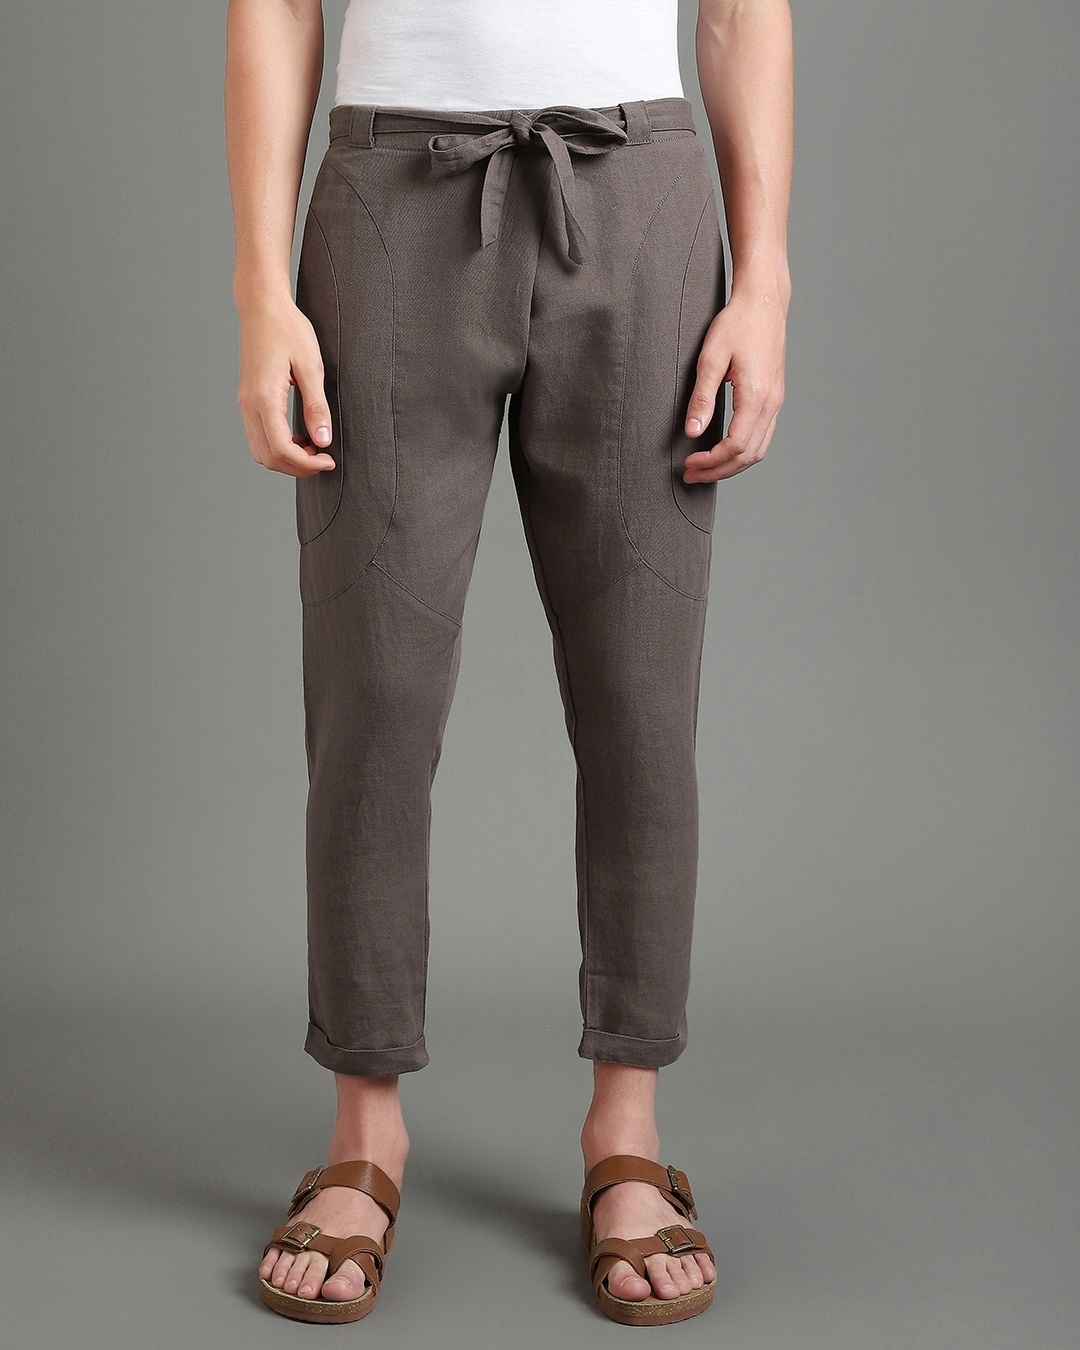 Summer Men's Casual Cotton Linen Baggy Harem Pants Beach Yoga Hippy Trousers  | Wish